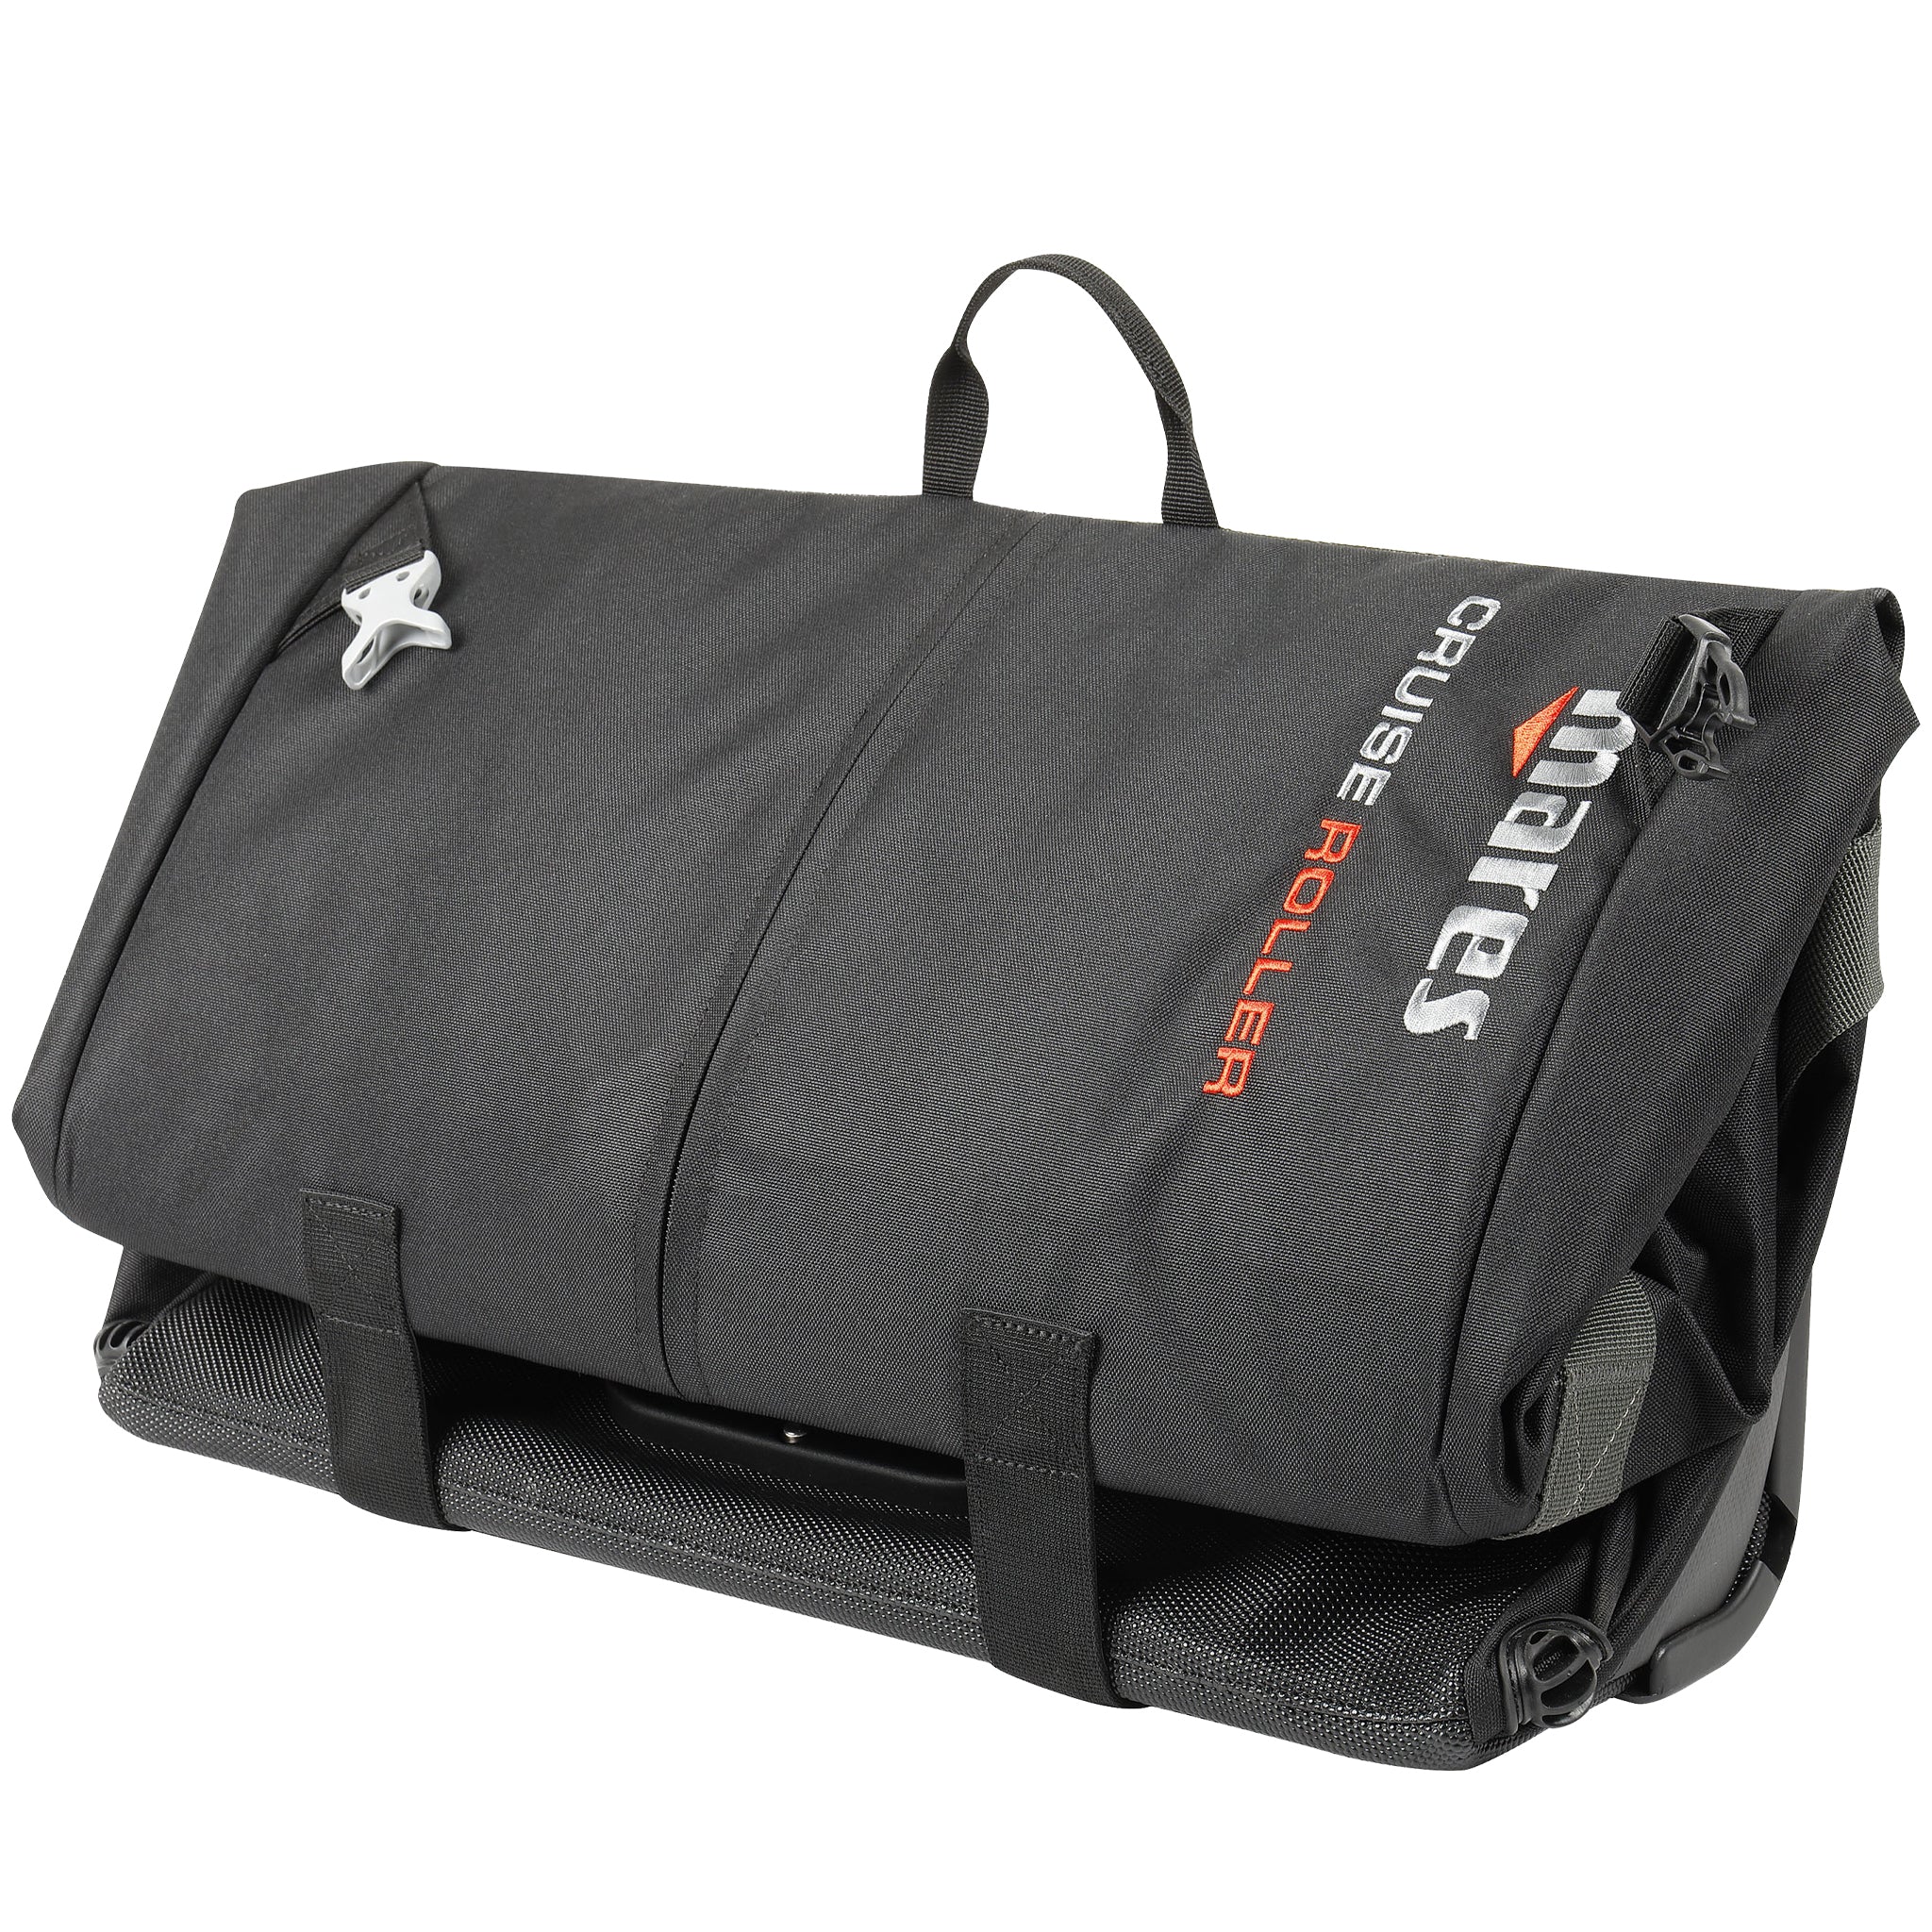 Mares Cruise Backpack Roller Bag RECYCLED - Black 128L Folded